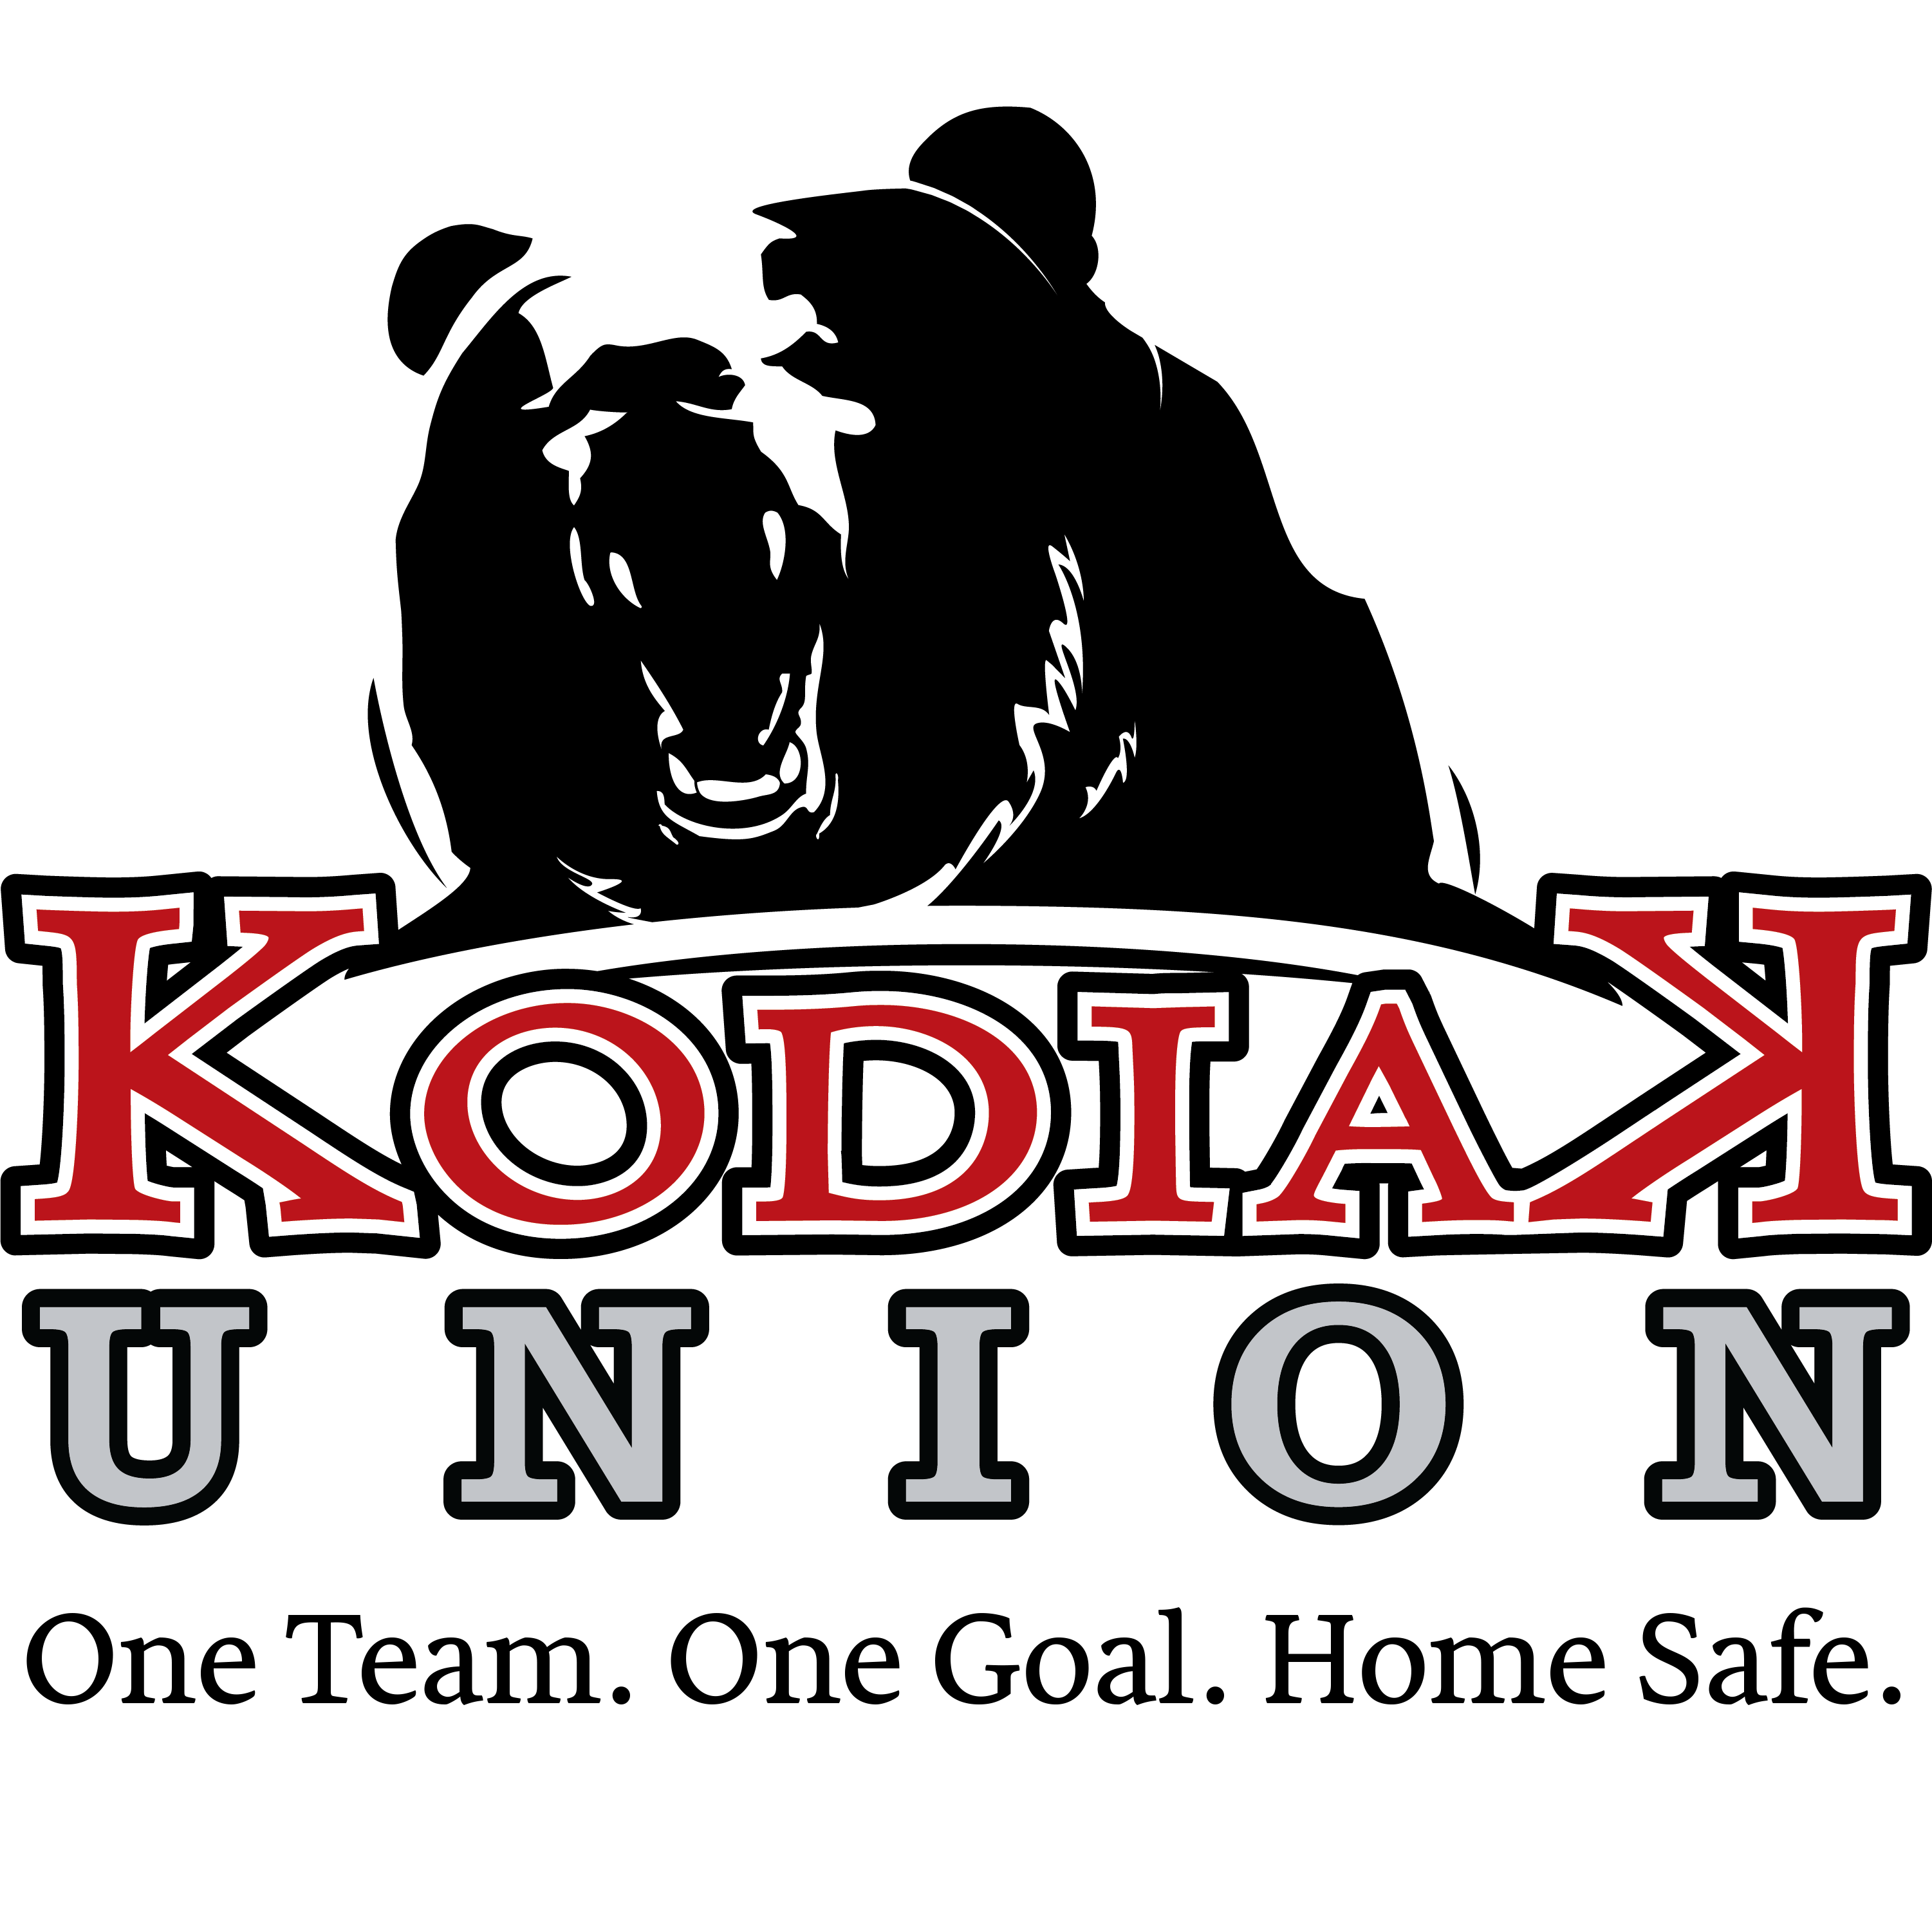 Kodiak Union Roofing Services Inc.